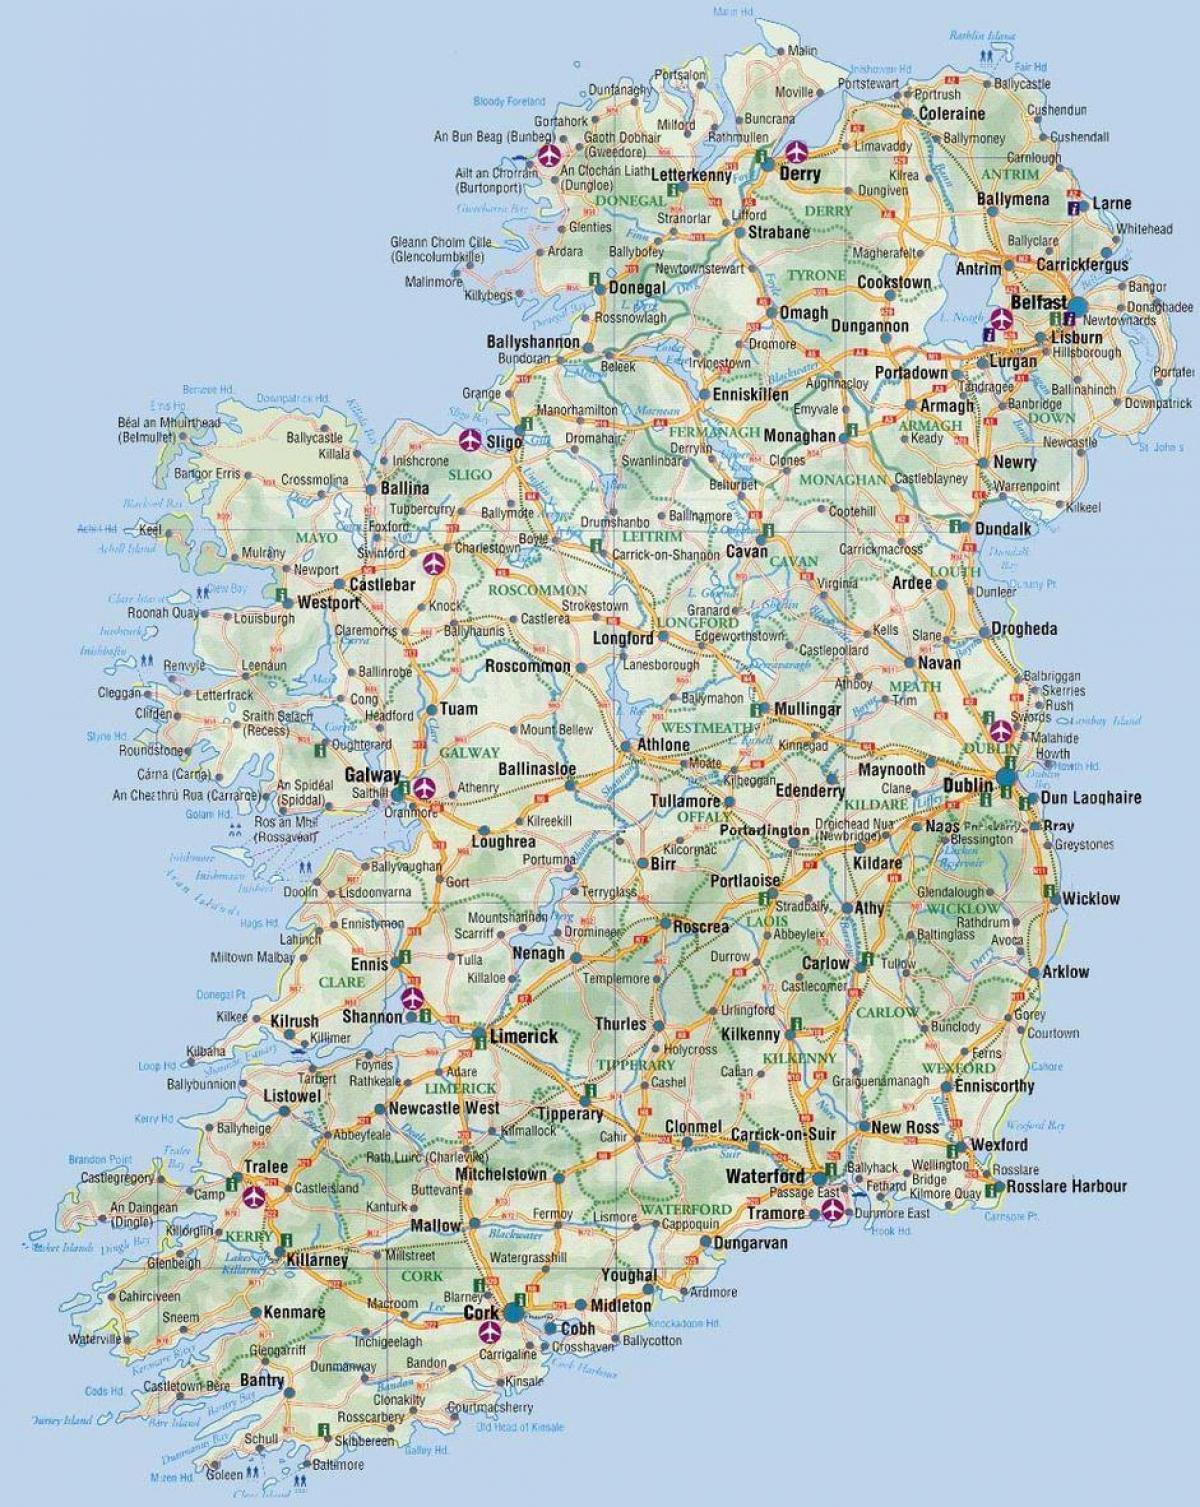 mapa bat irlandako